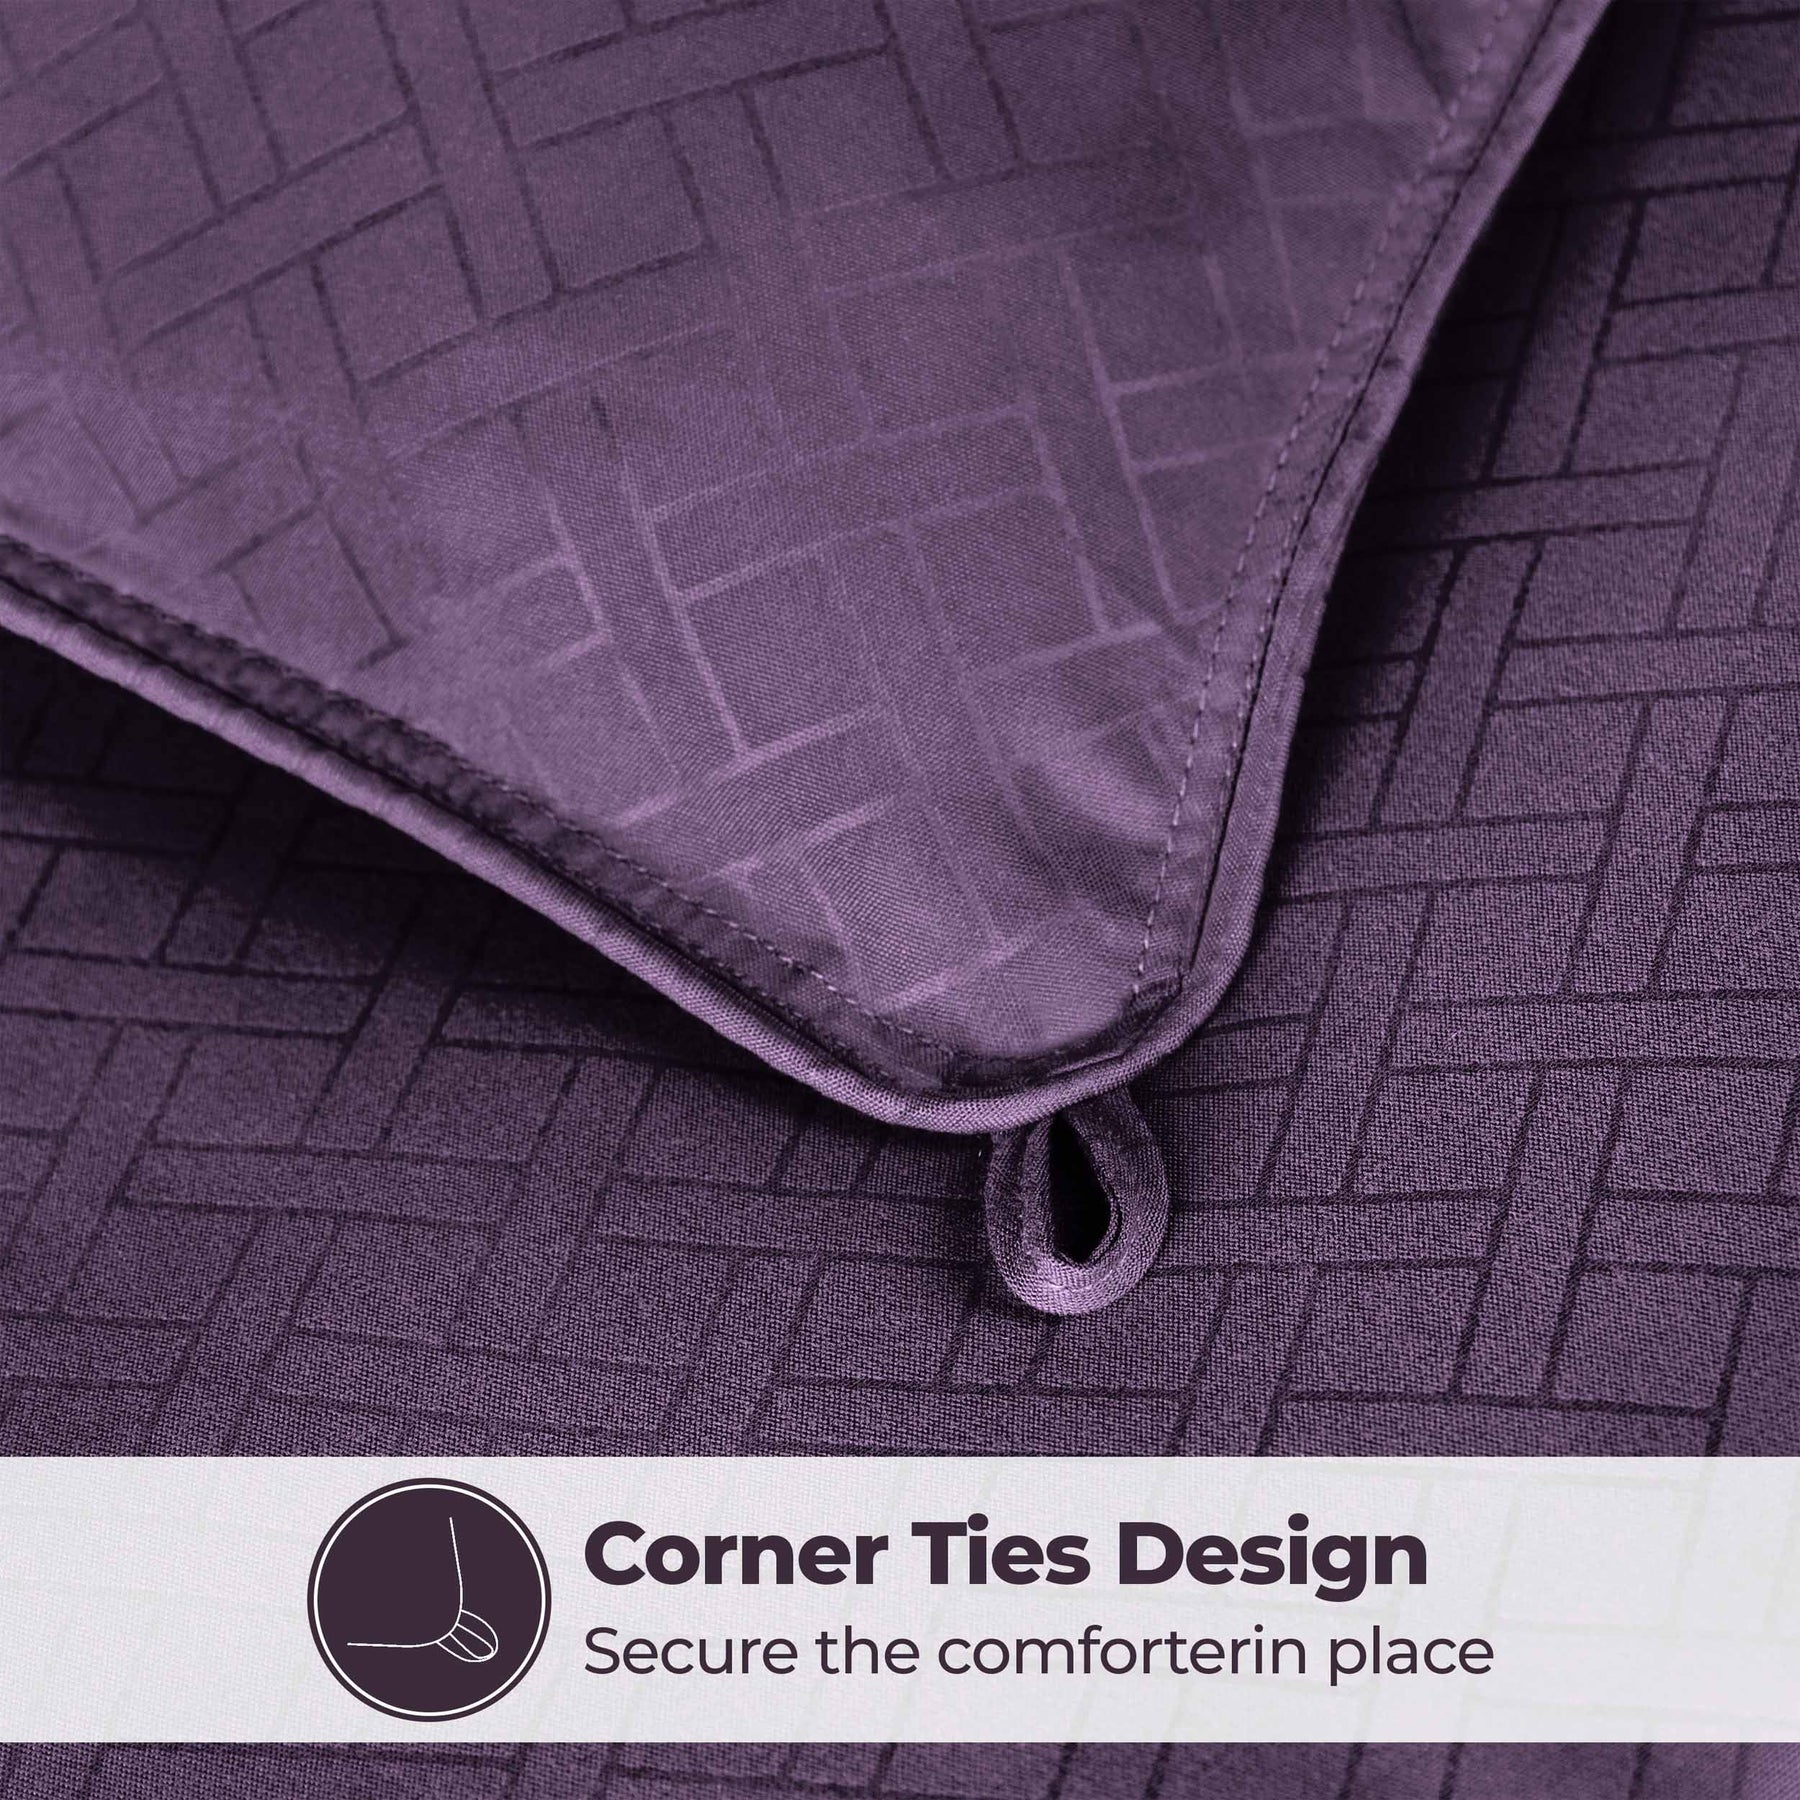 Monochrome Basketweave Plush Microfiber Down Alternative Comforter - Plum